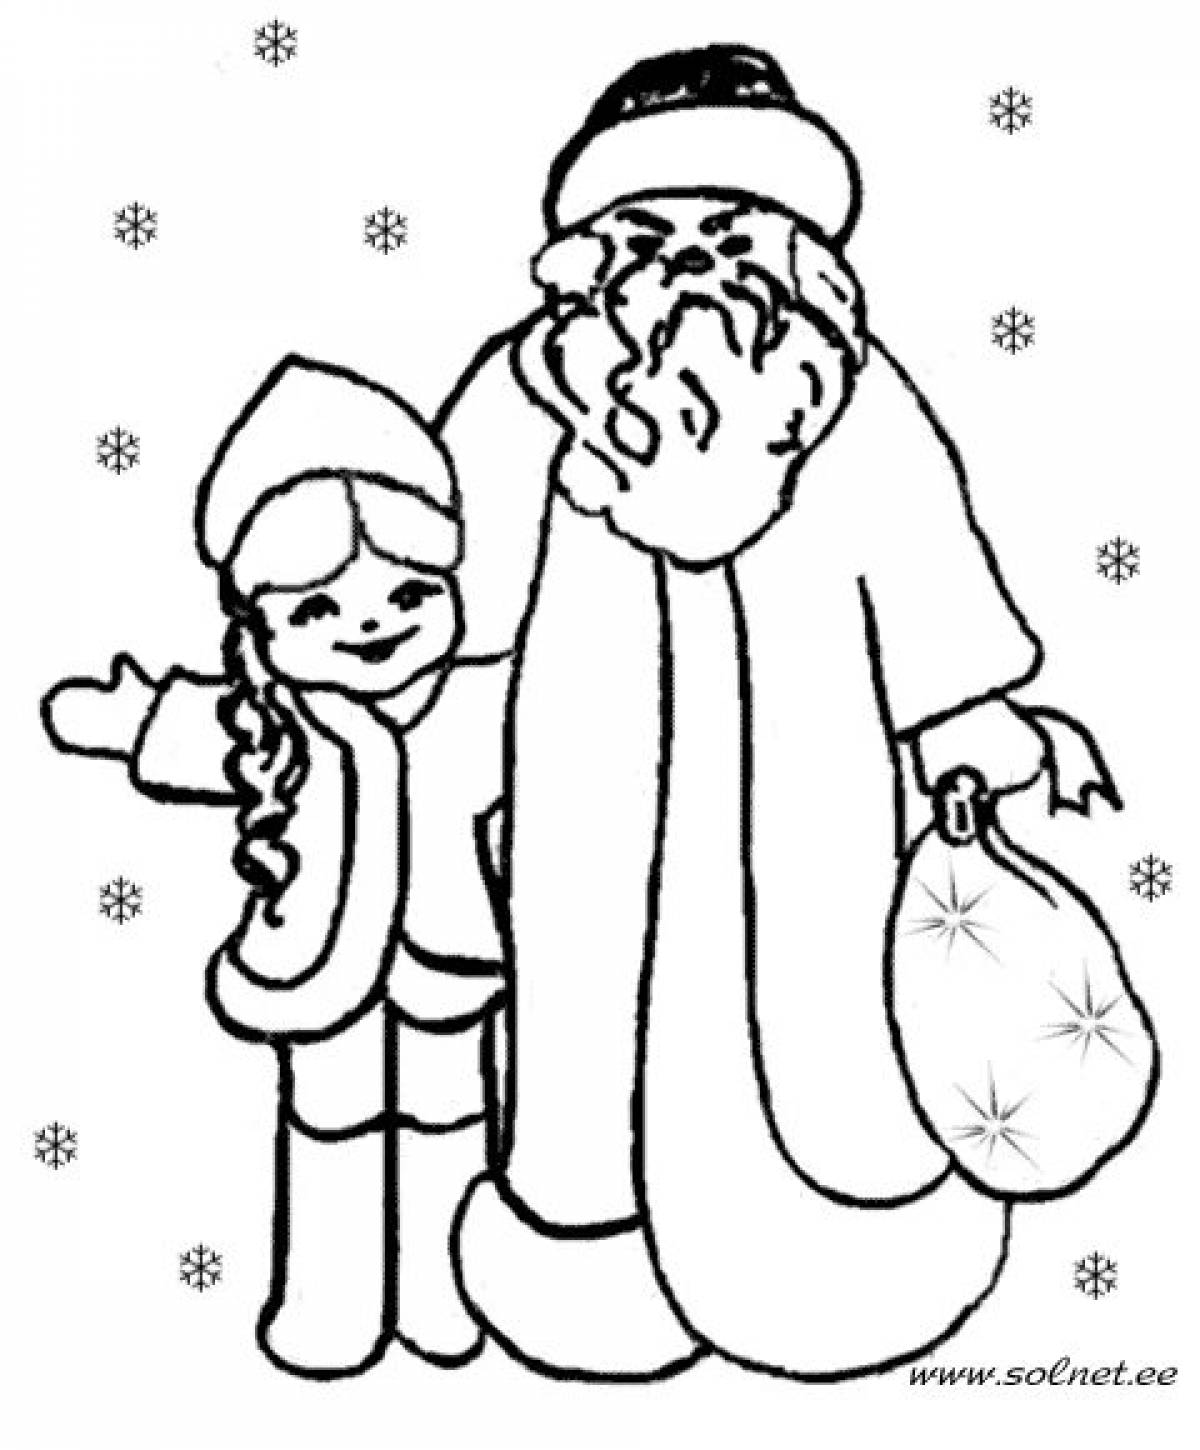 Joyful drawing of Santa Claus and Snow Maiden